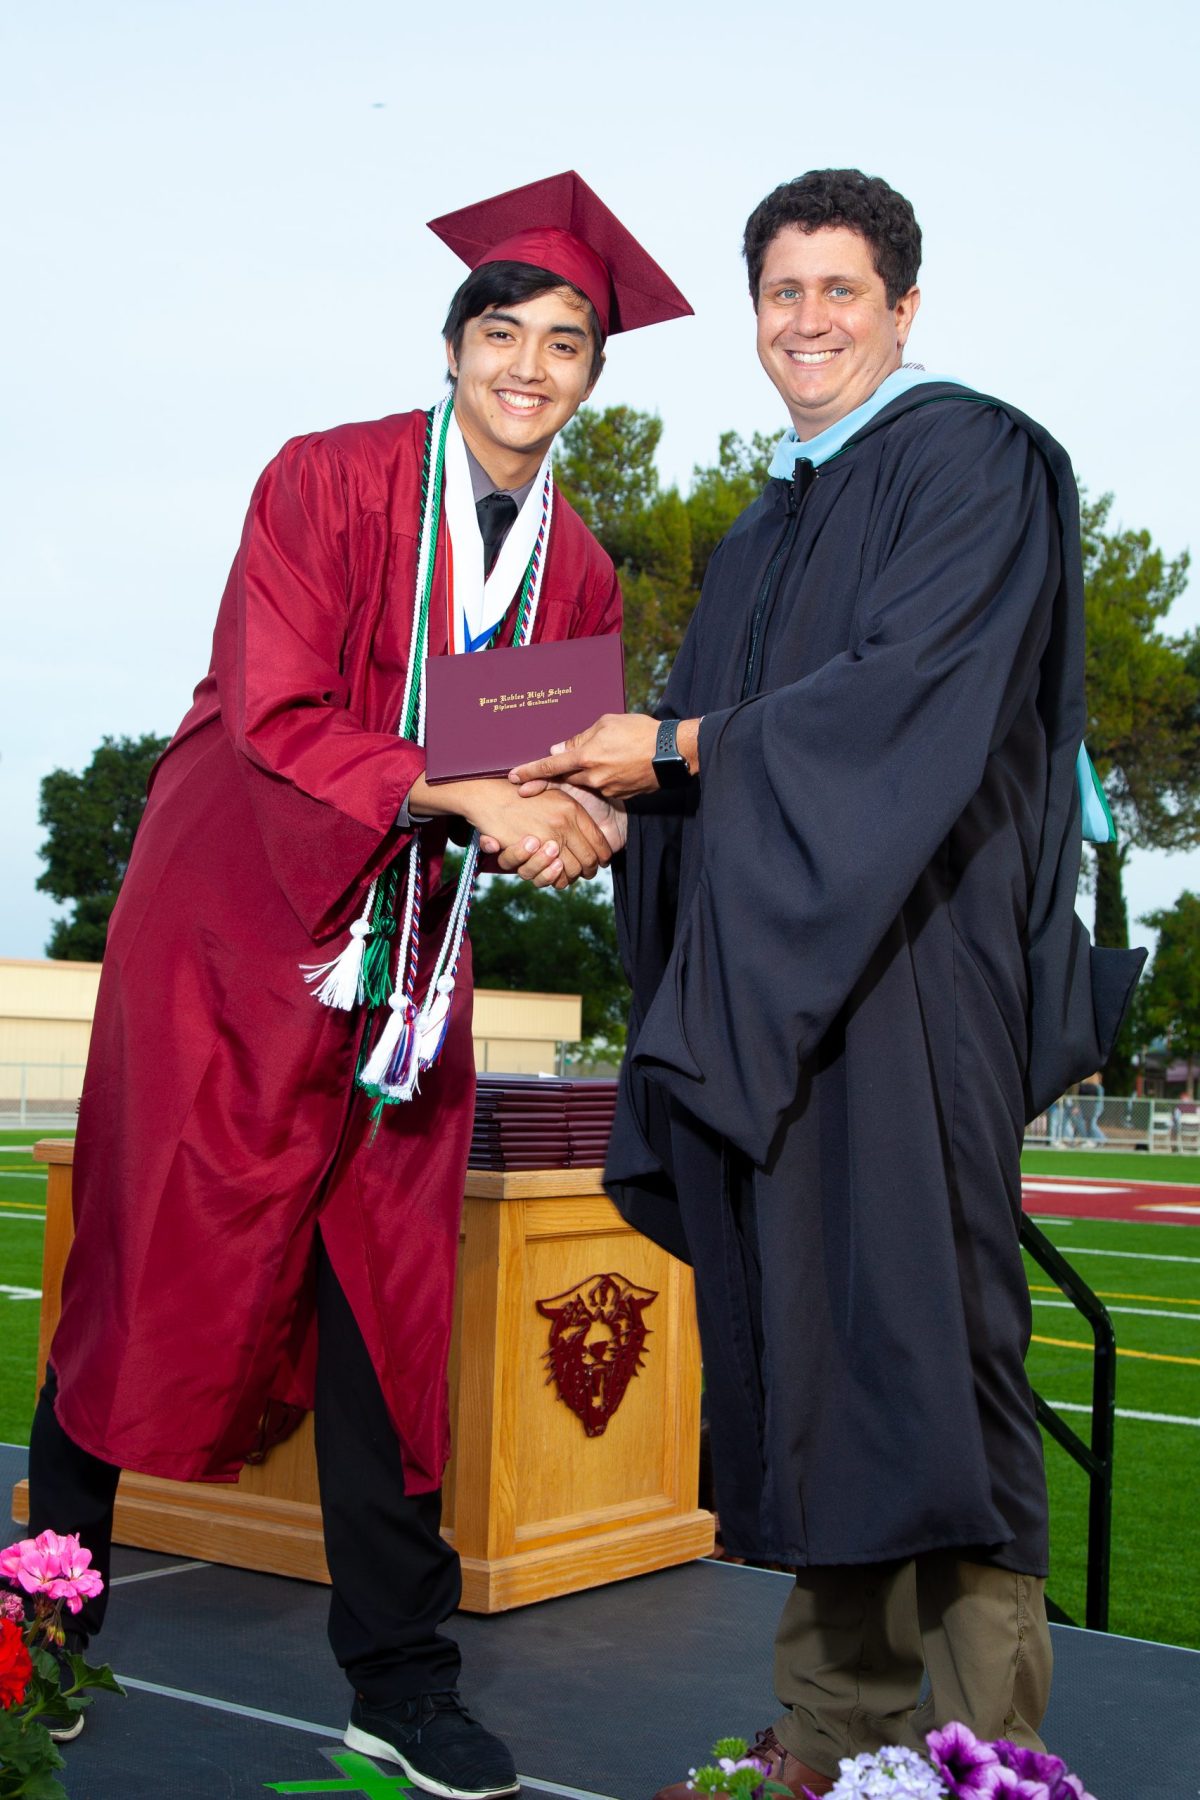 Paso Robles High School graduation honors achievements and embraces